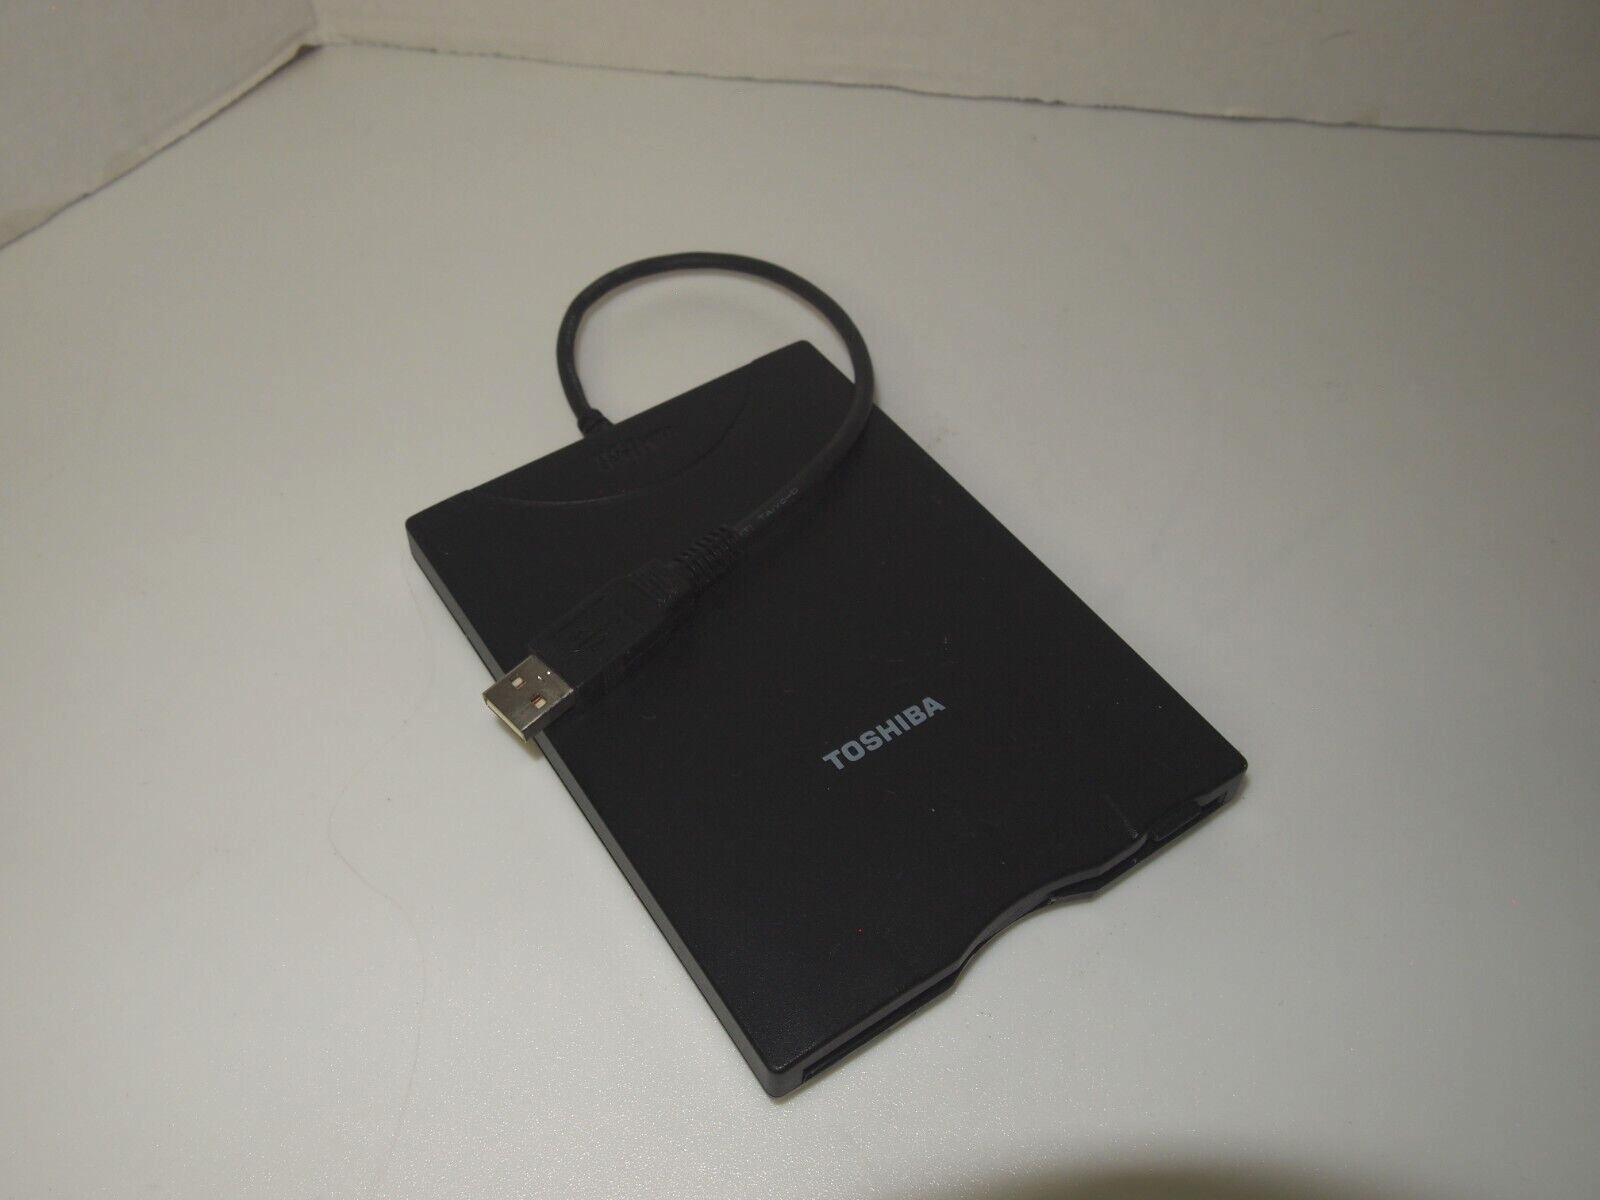 Toshiba USB FDD Kit External Floppy Drive Wired Disk Part Model No. PA3214U-2FDD